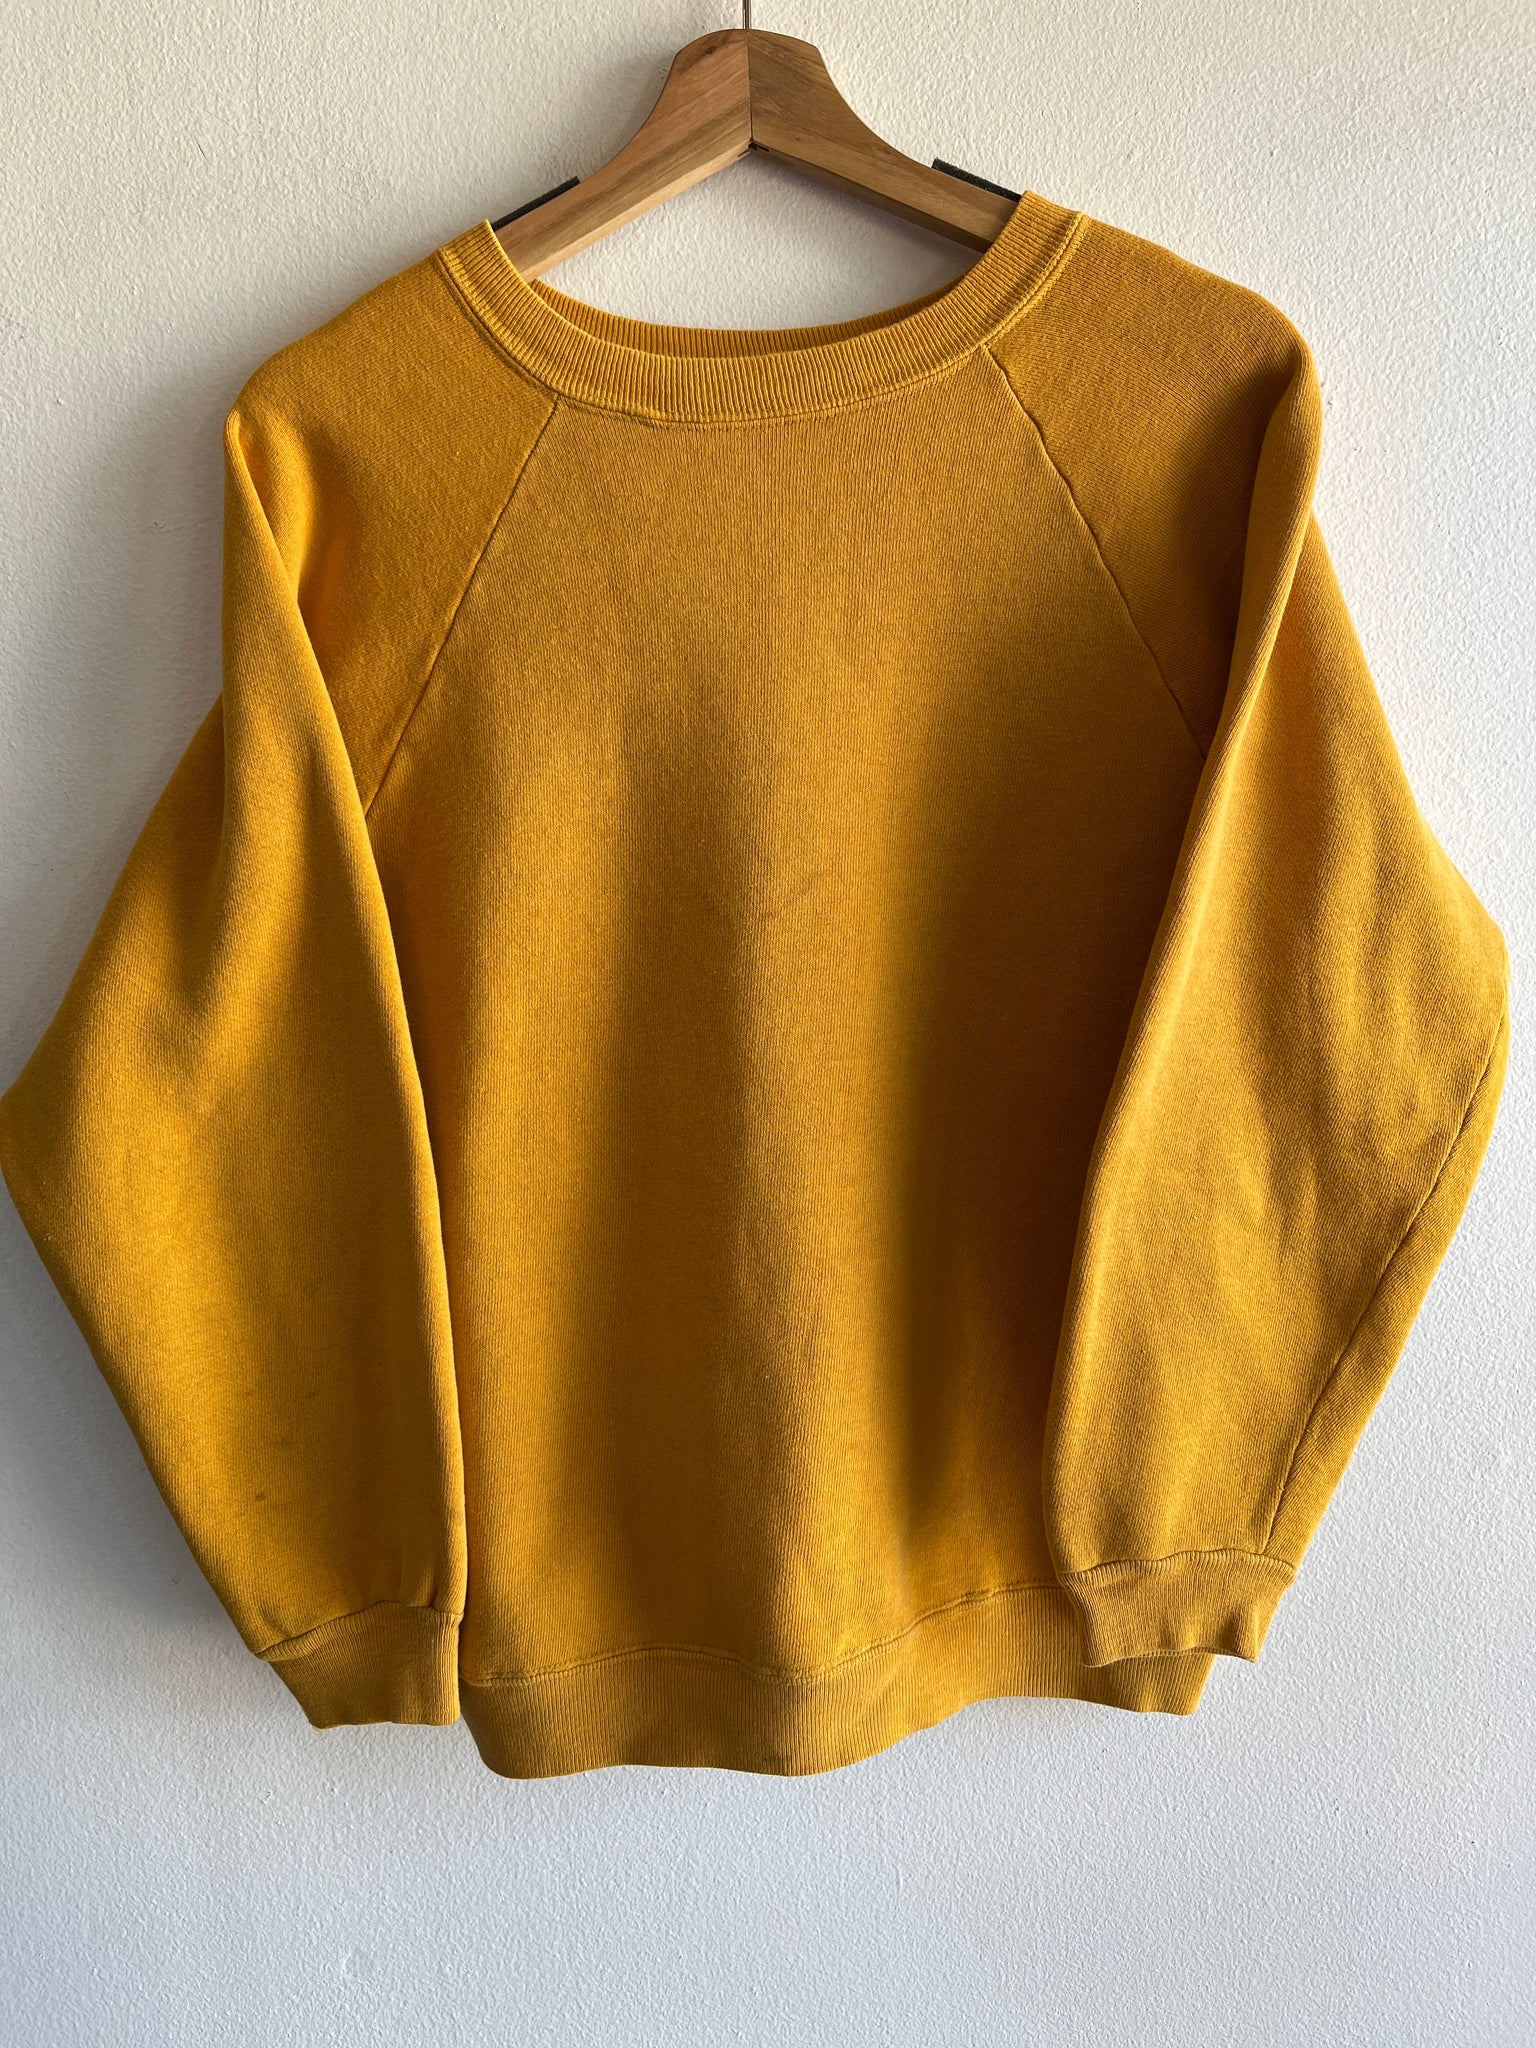 Vintage 1960/70’s Marigold Sweatshirt